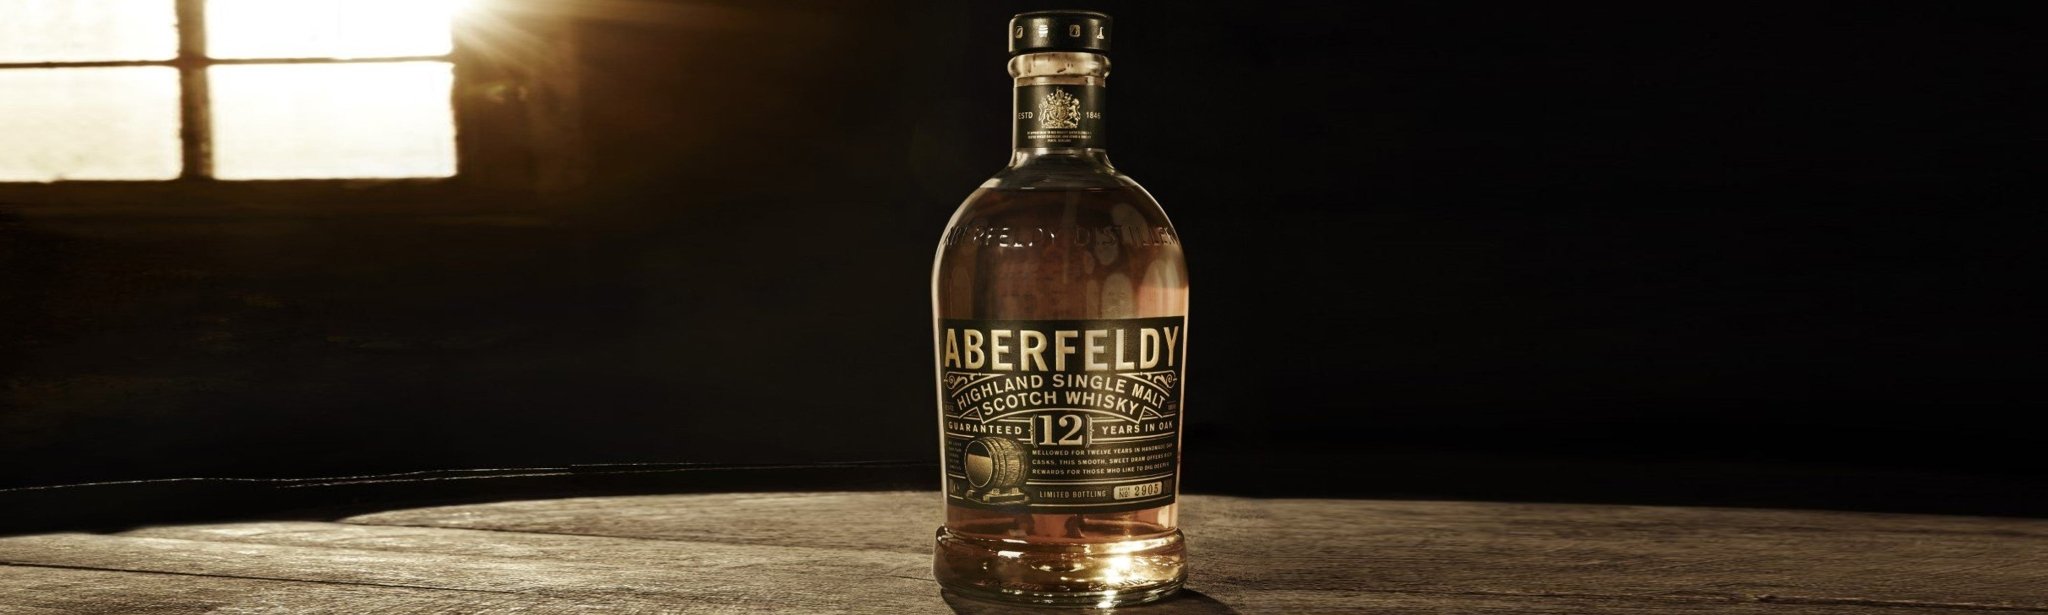 Aberfeldy - The Bottle Club